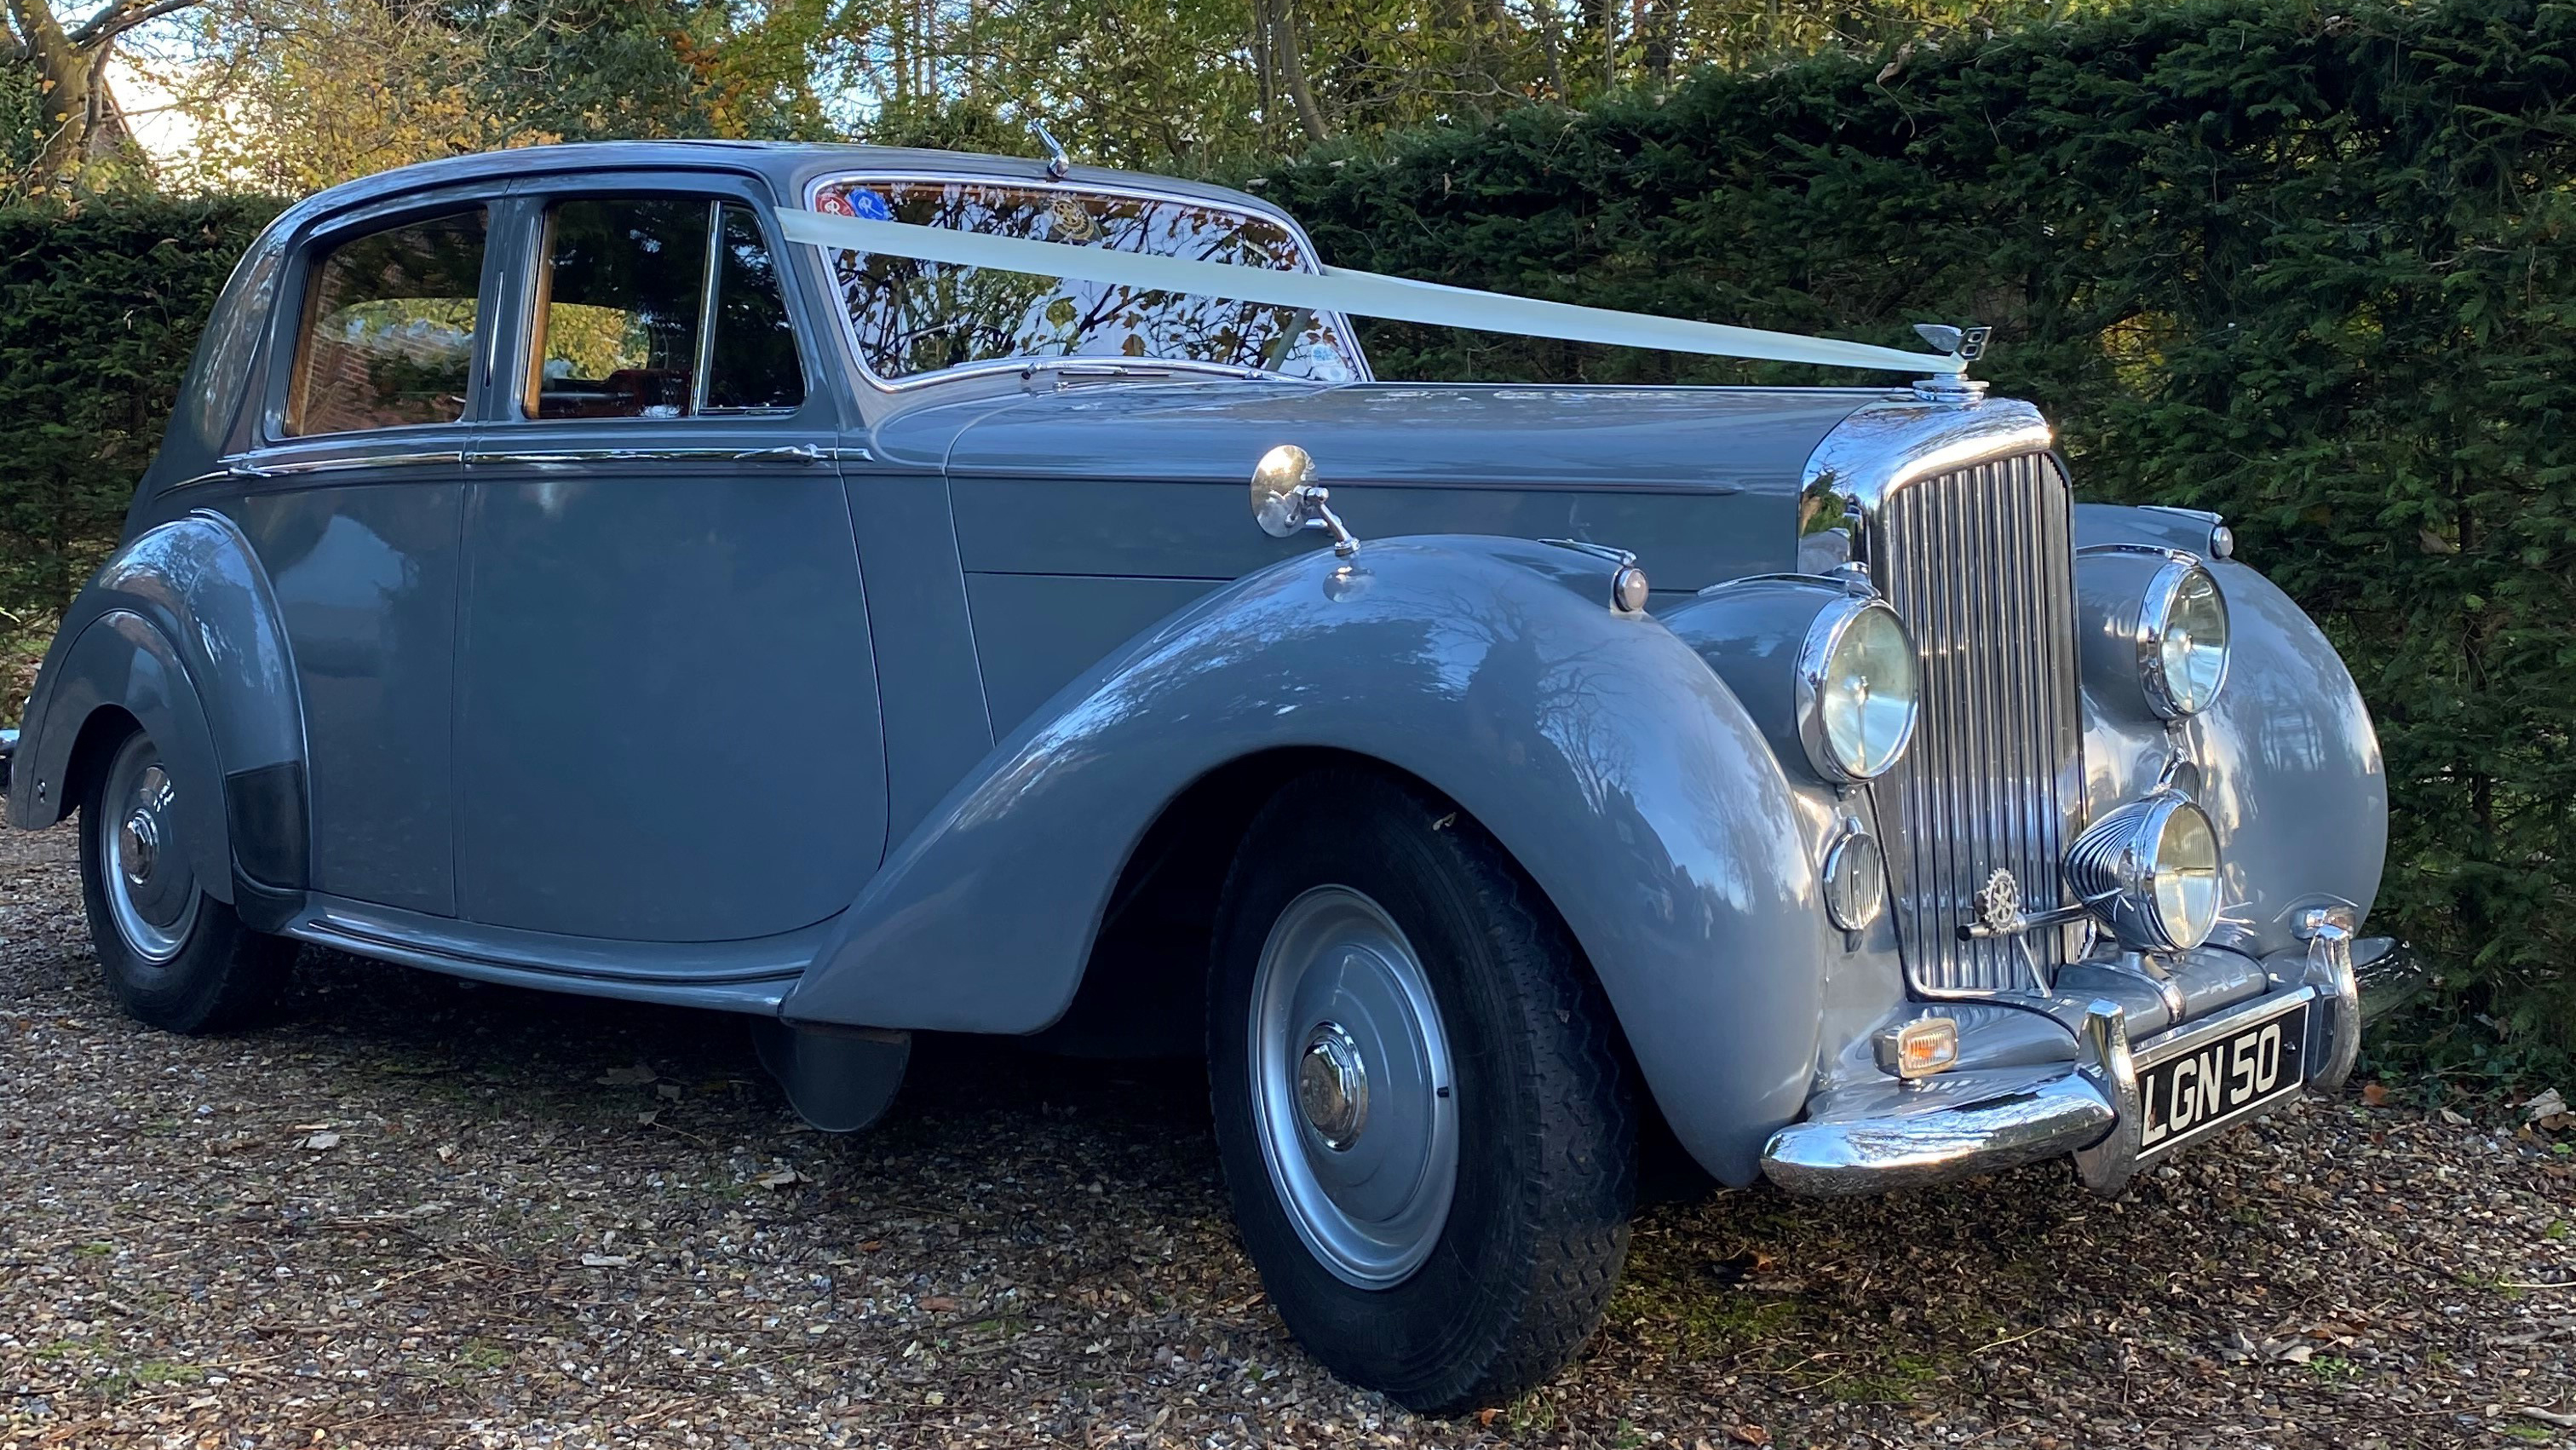 Bentley MKVI wedding car for hire in Aylesbury, Buckinghamshire